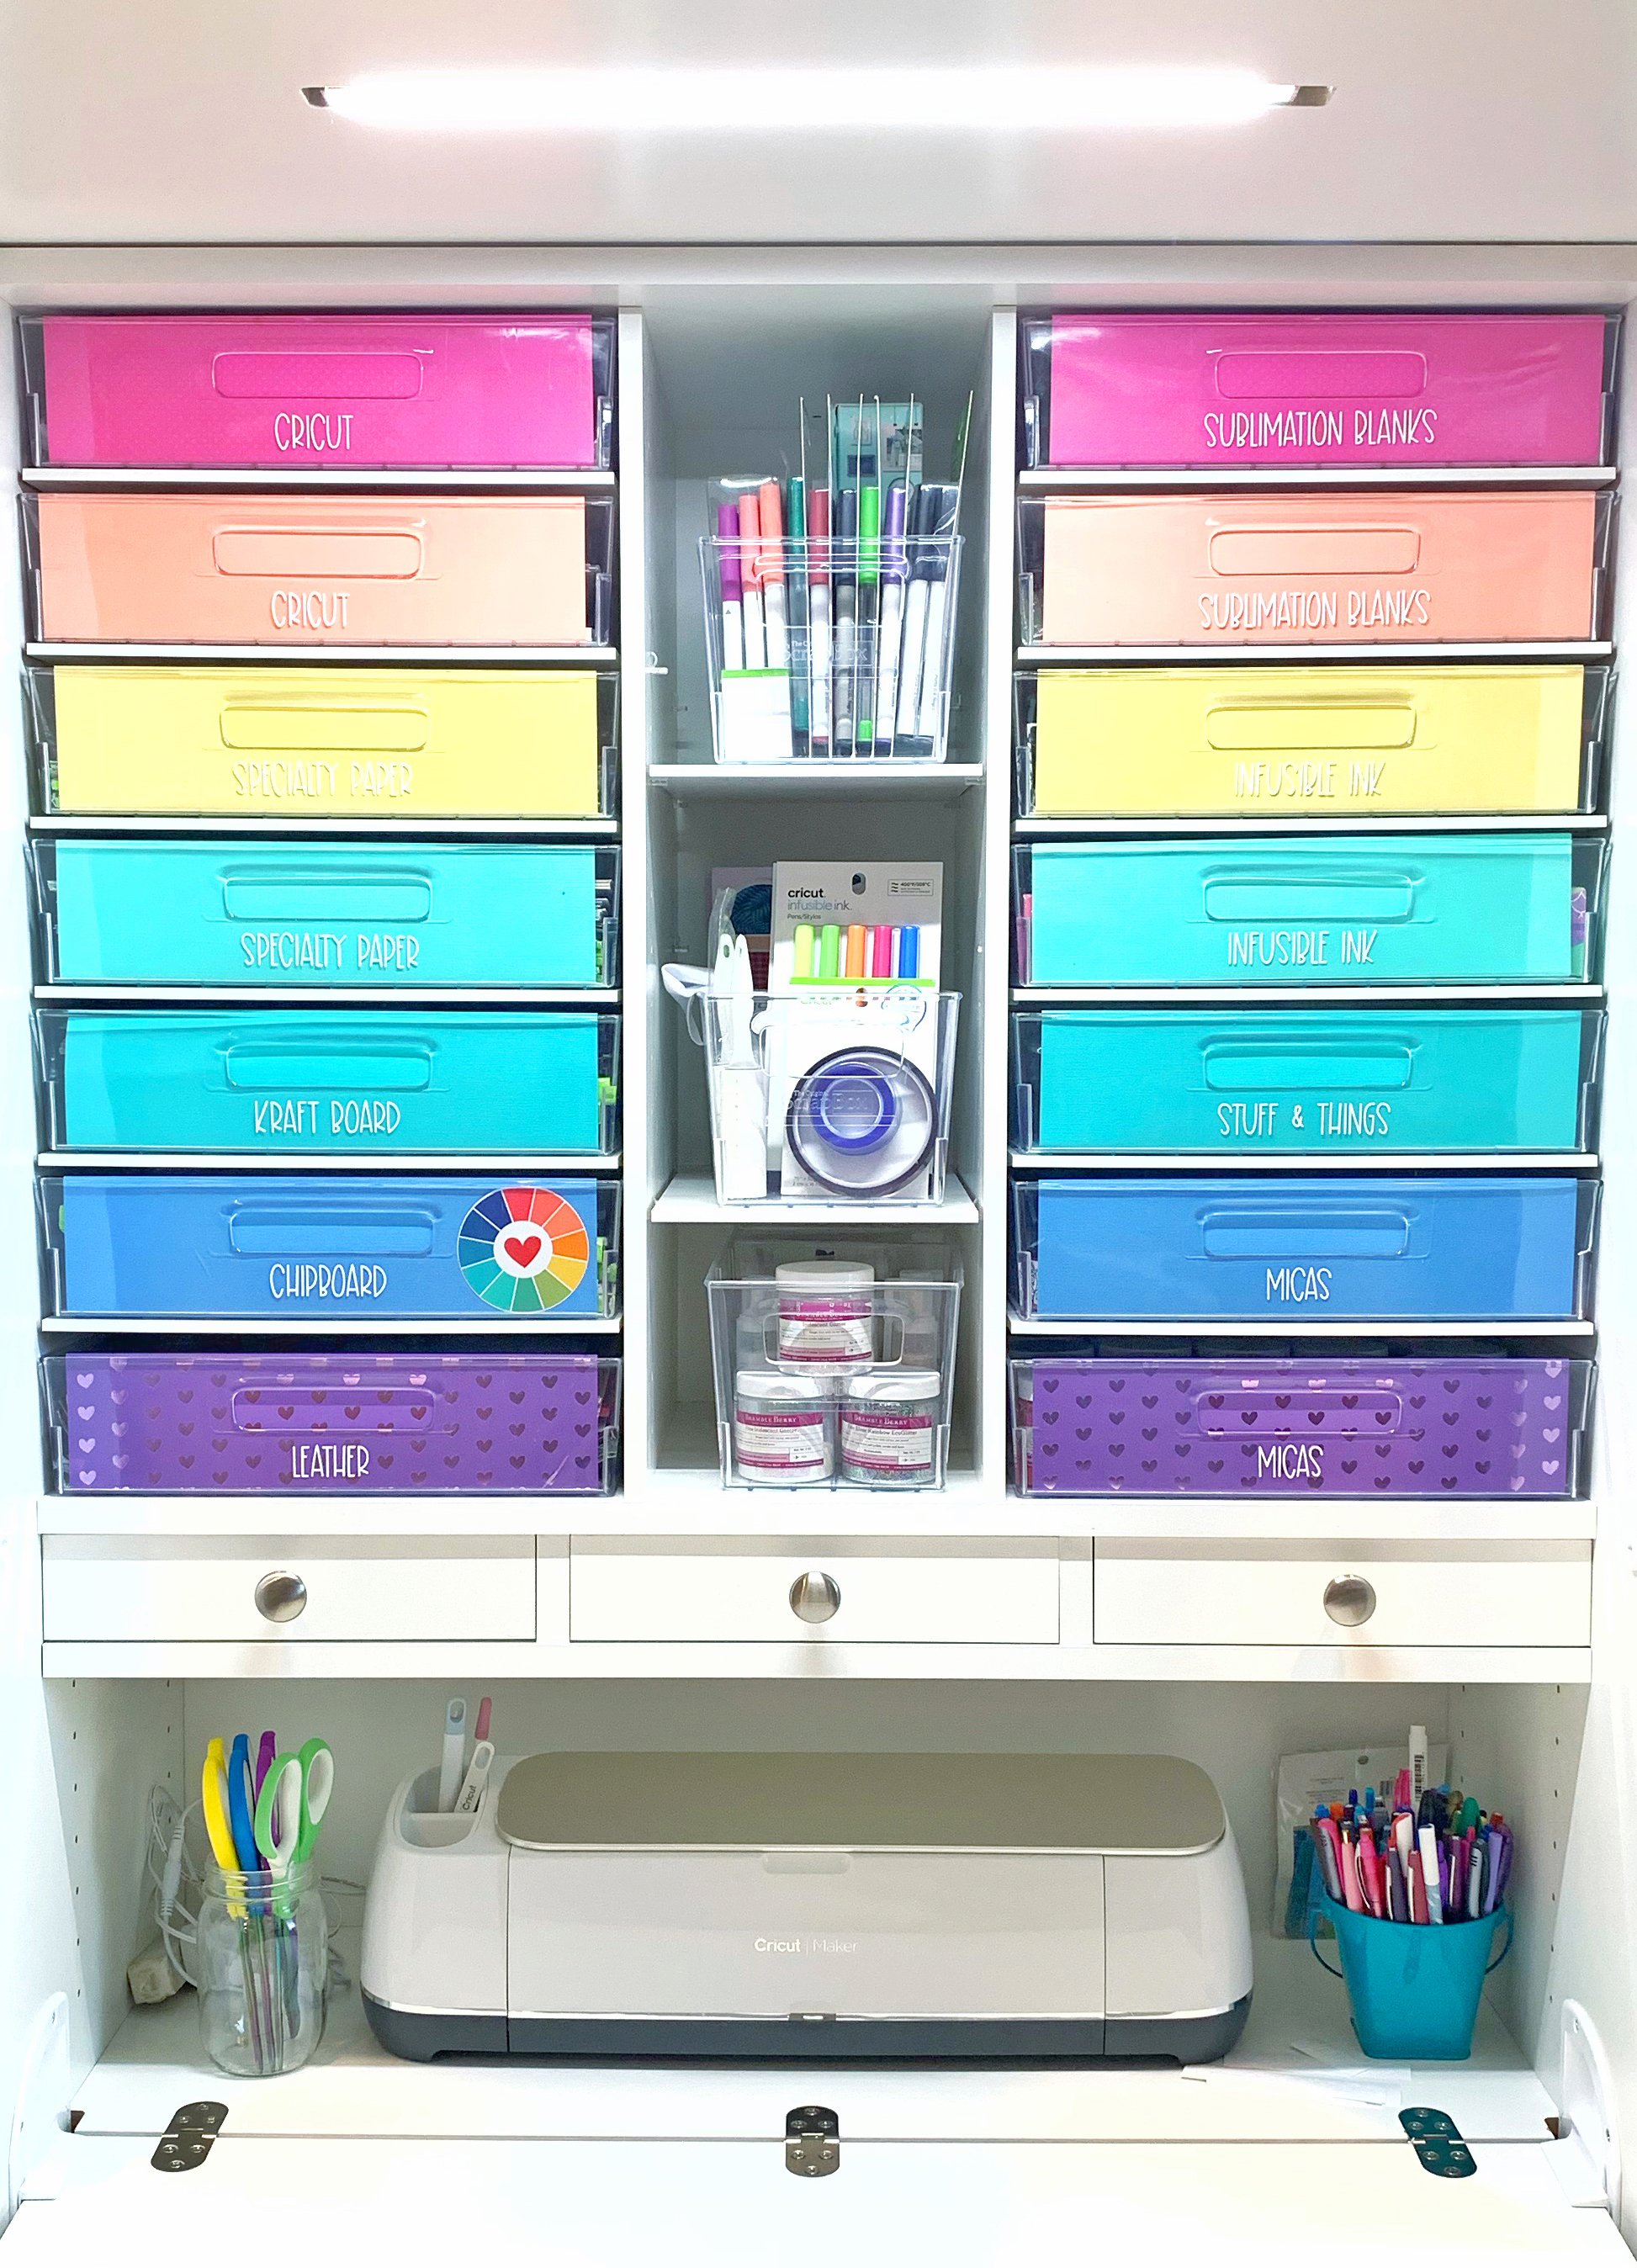 rainbow shelf organizable bins in dreambox